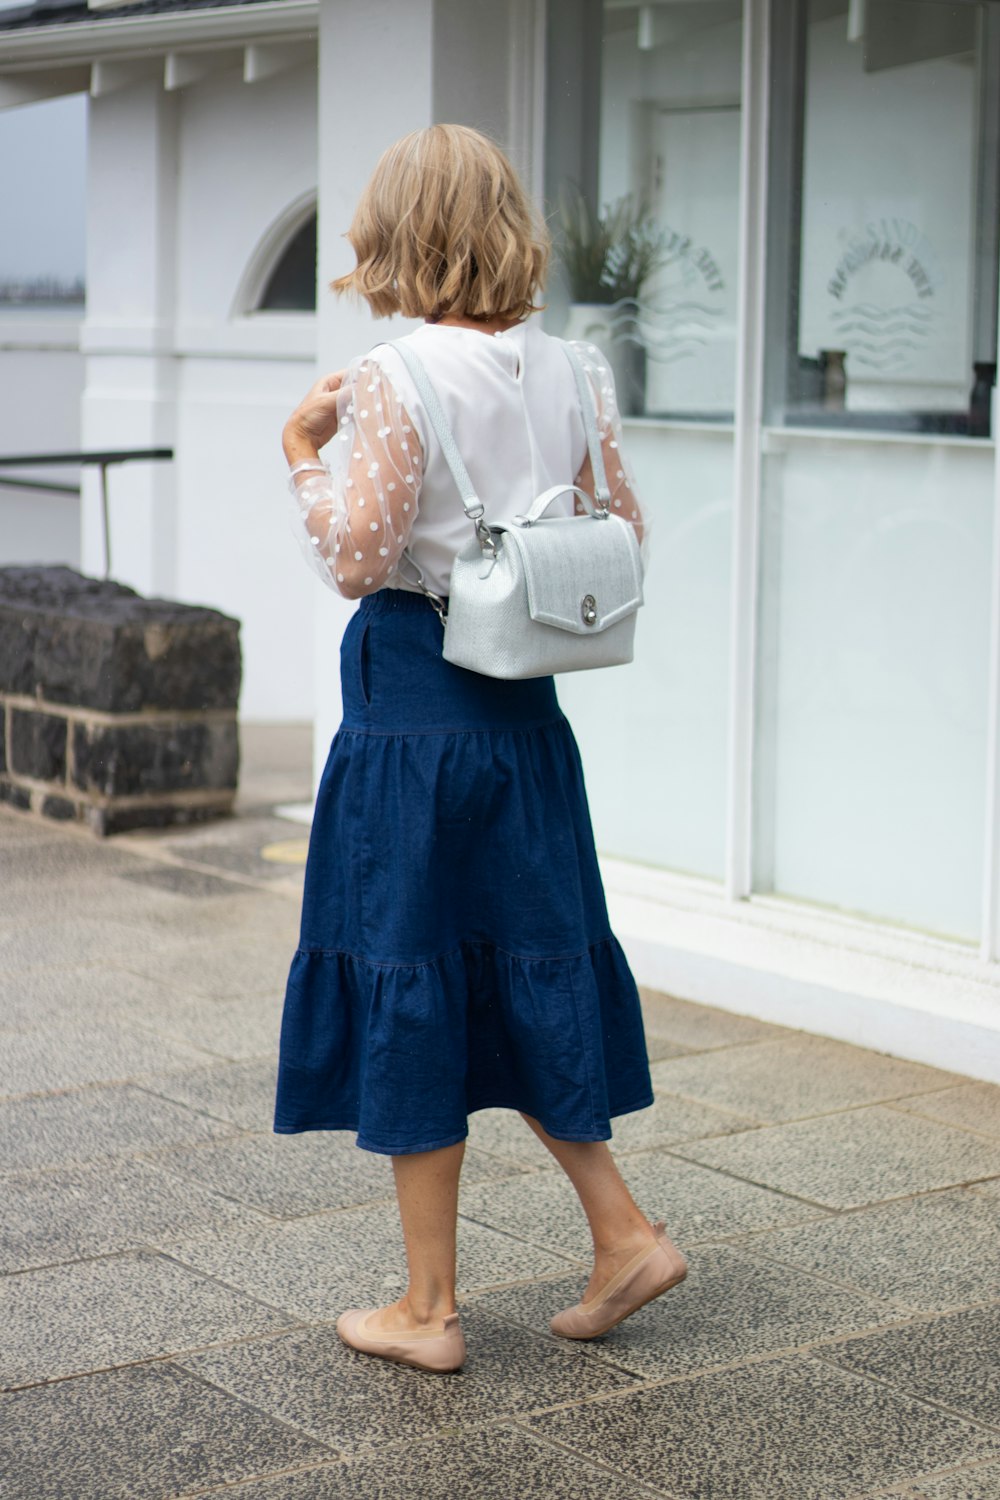 a woman walking down a sidewalk carrying a white purse